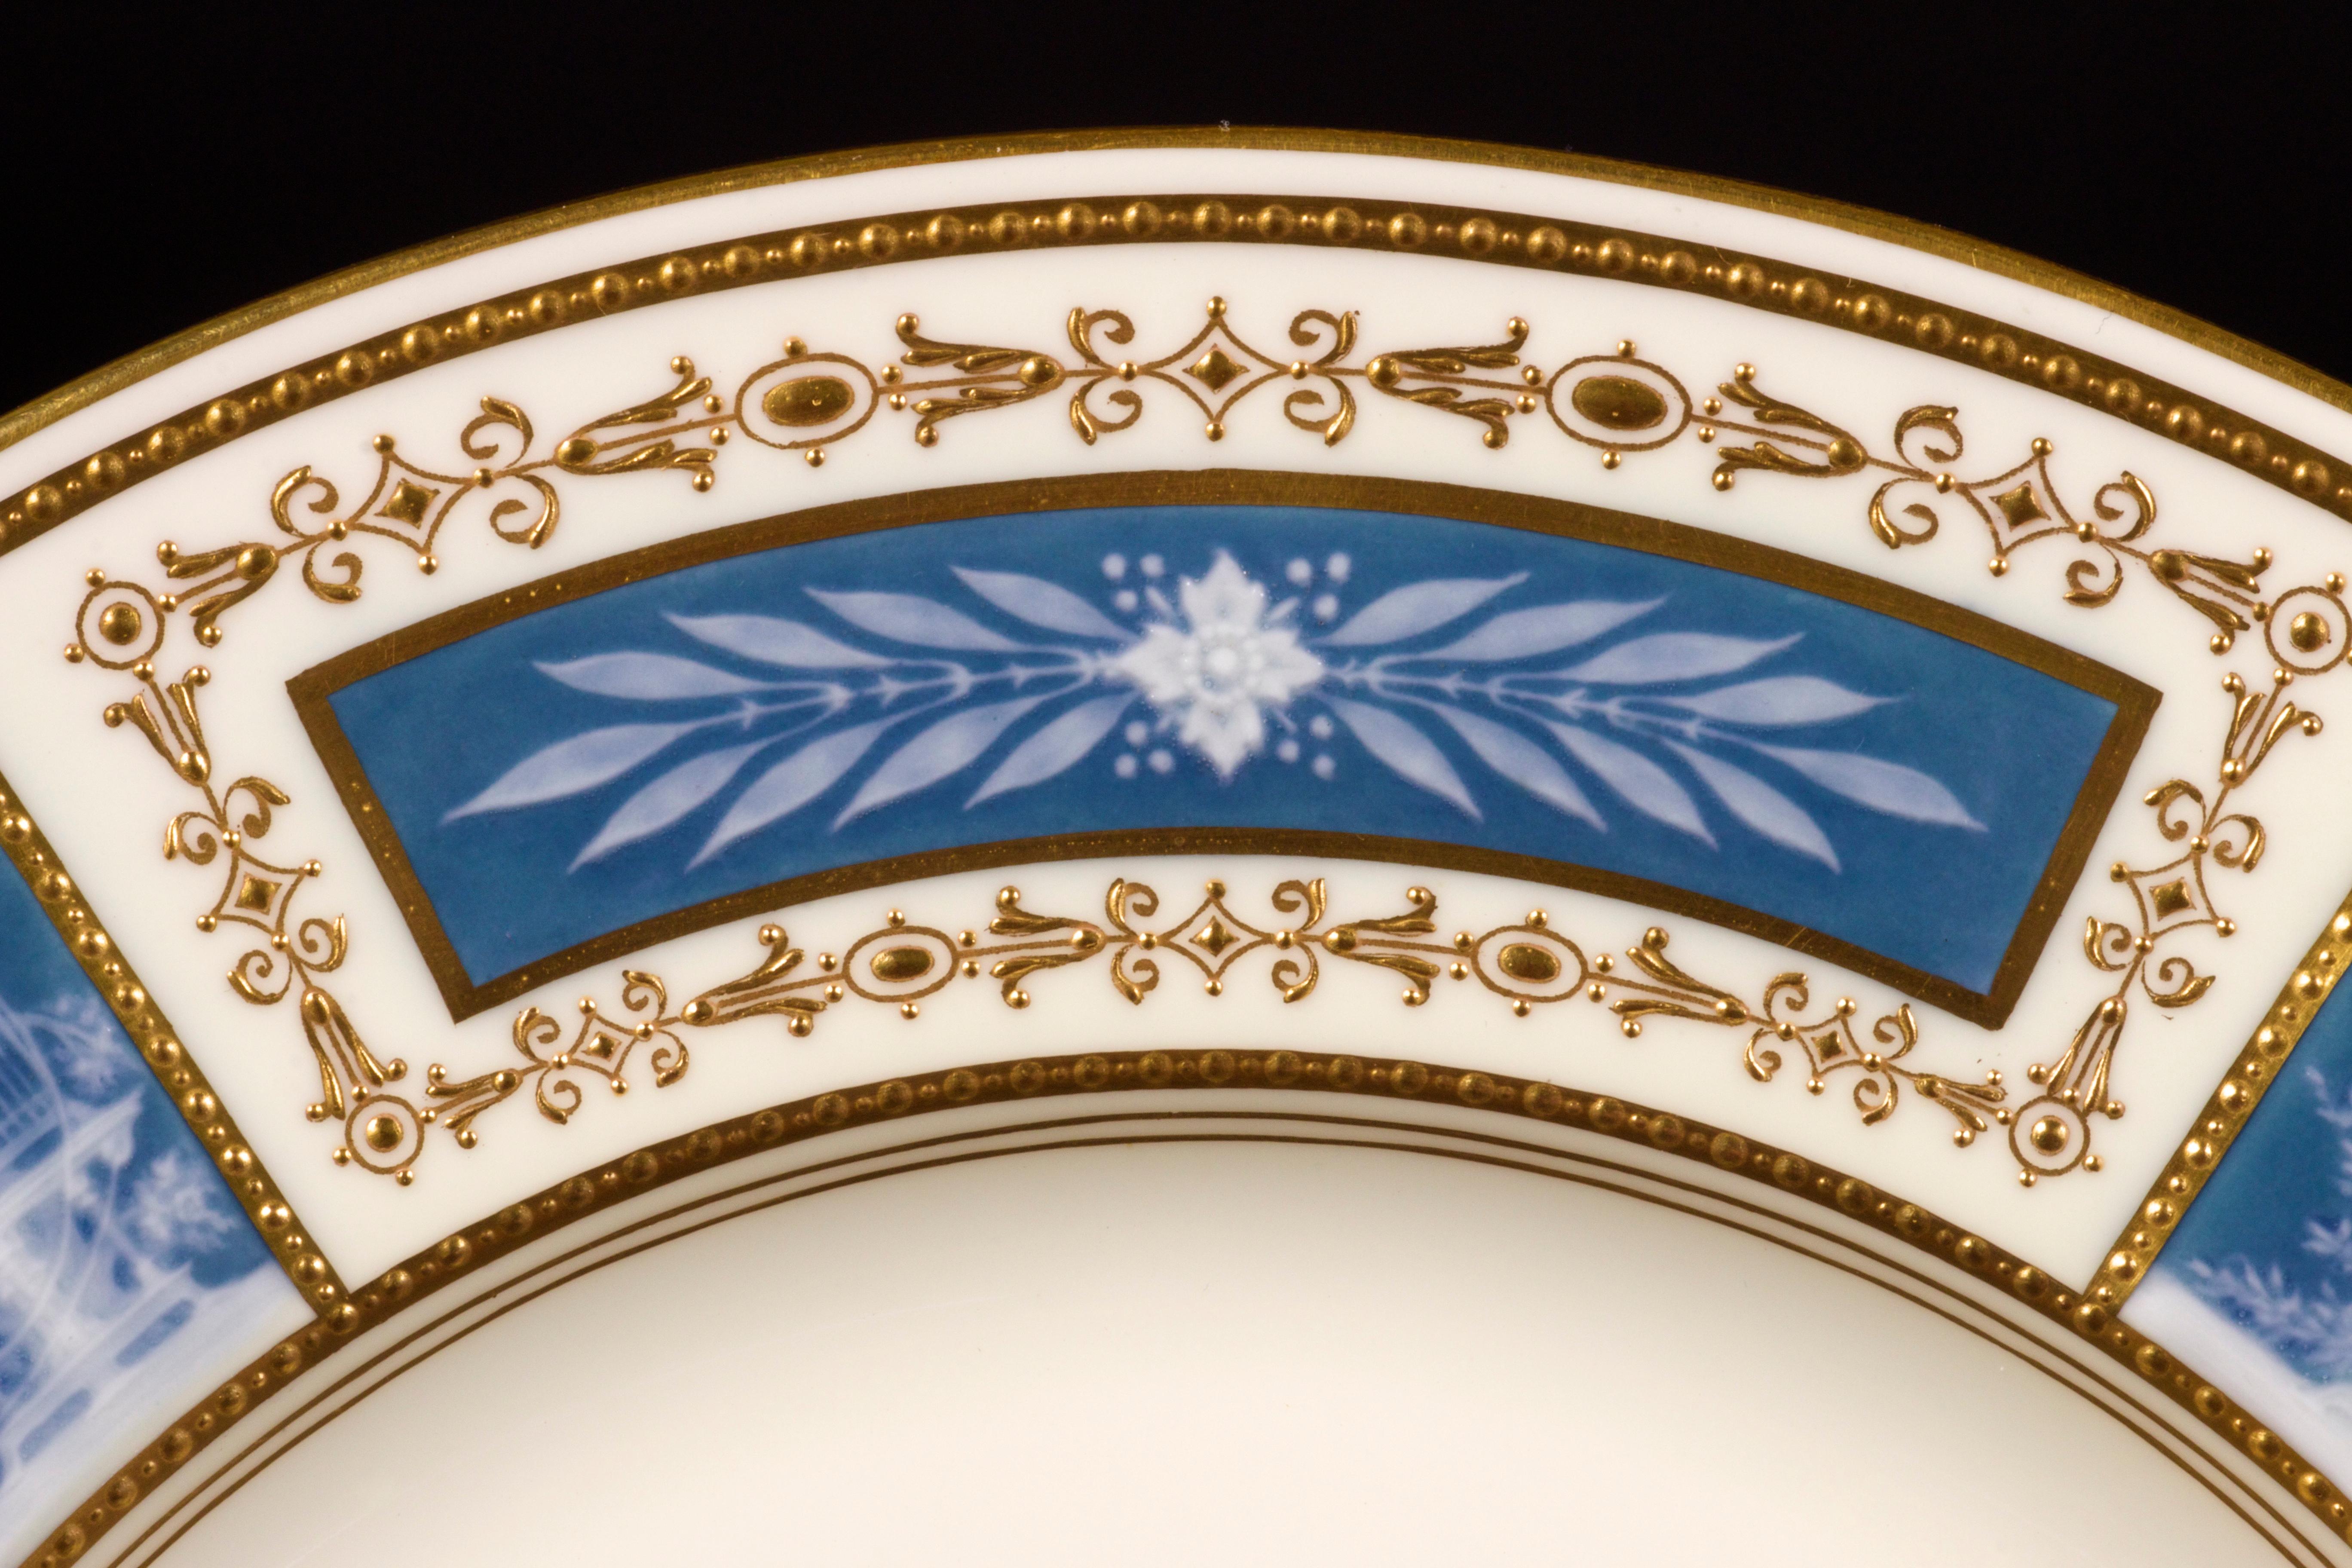 8 Minton Pate-sur-pate Blue Plates for Tiffany, by Artist Albion Birks 2